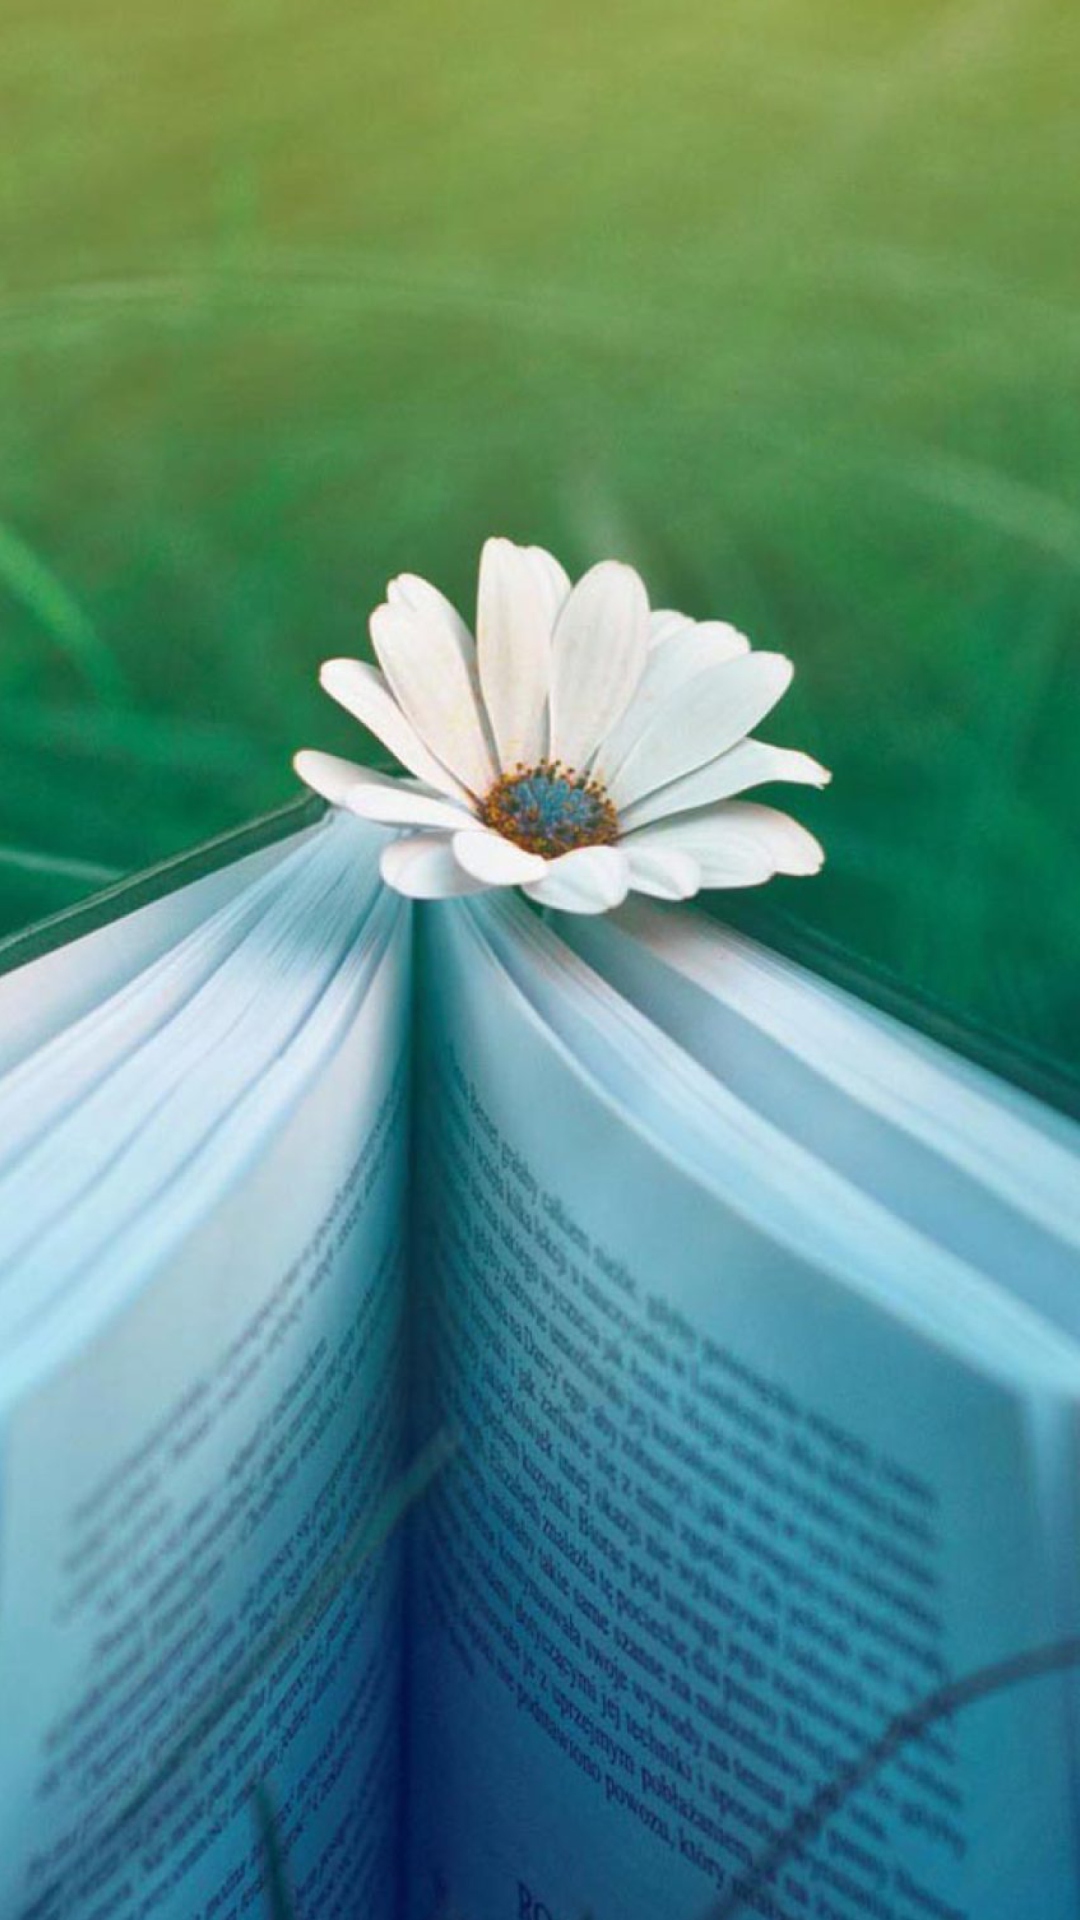 Sfondi Flower And Book 1080x1920